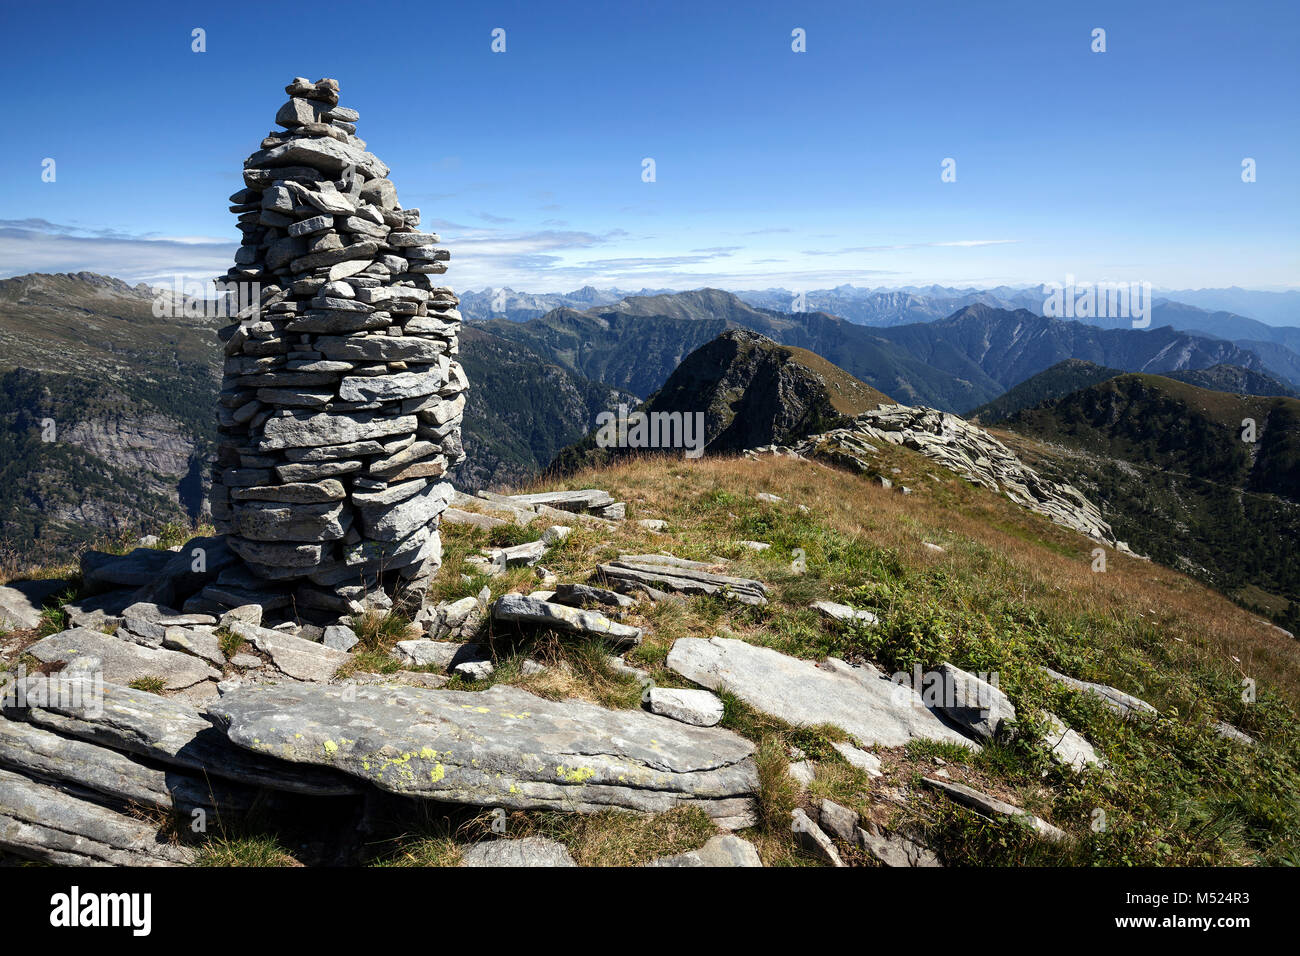 Cairn on peak of Mount Pilone,border between Switzerland and Italy,between Onsernone Valley and Vergelette Valley Stock Photo